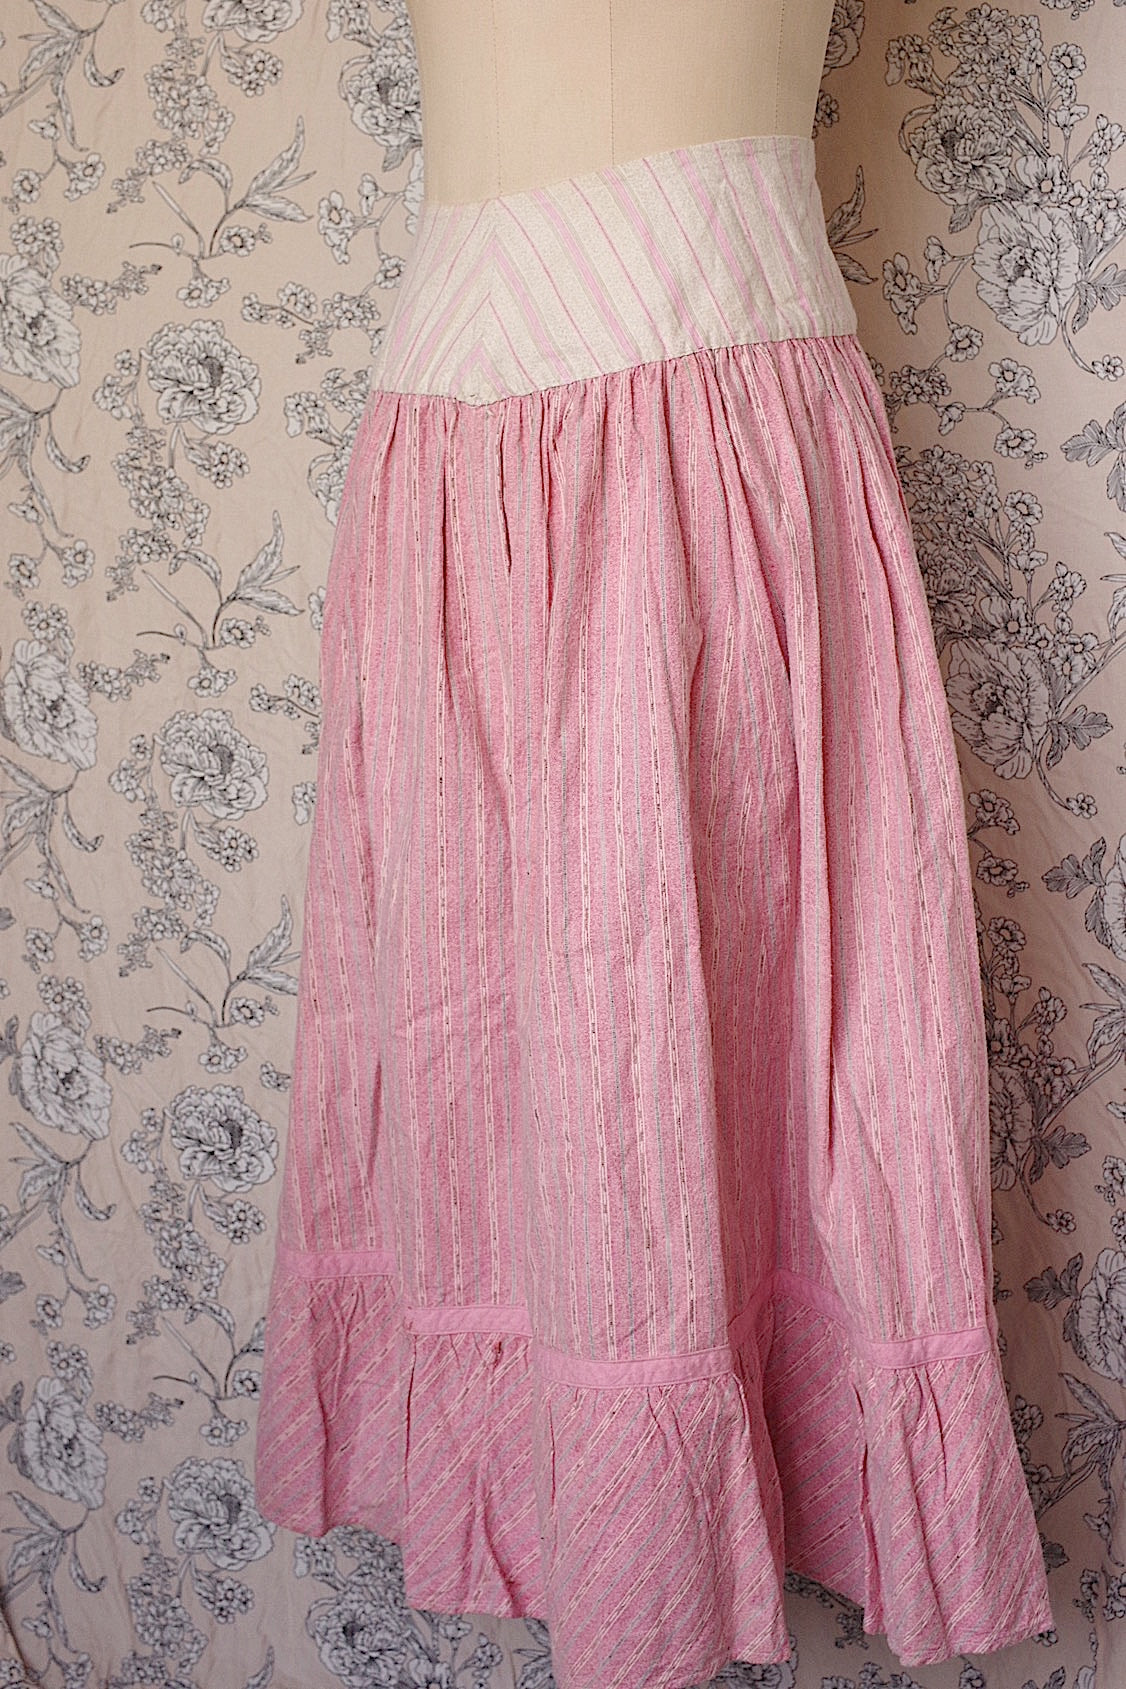 antique skirt